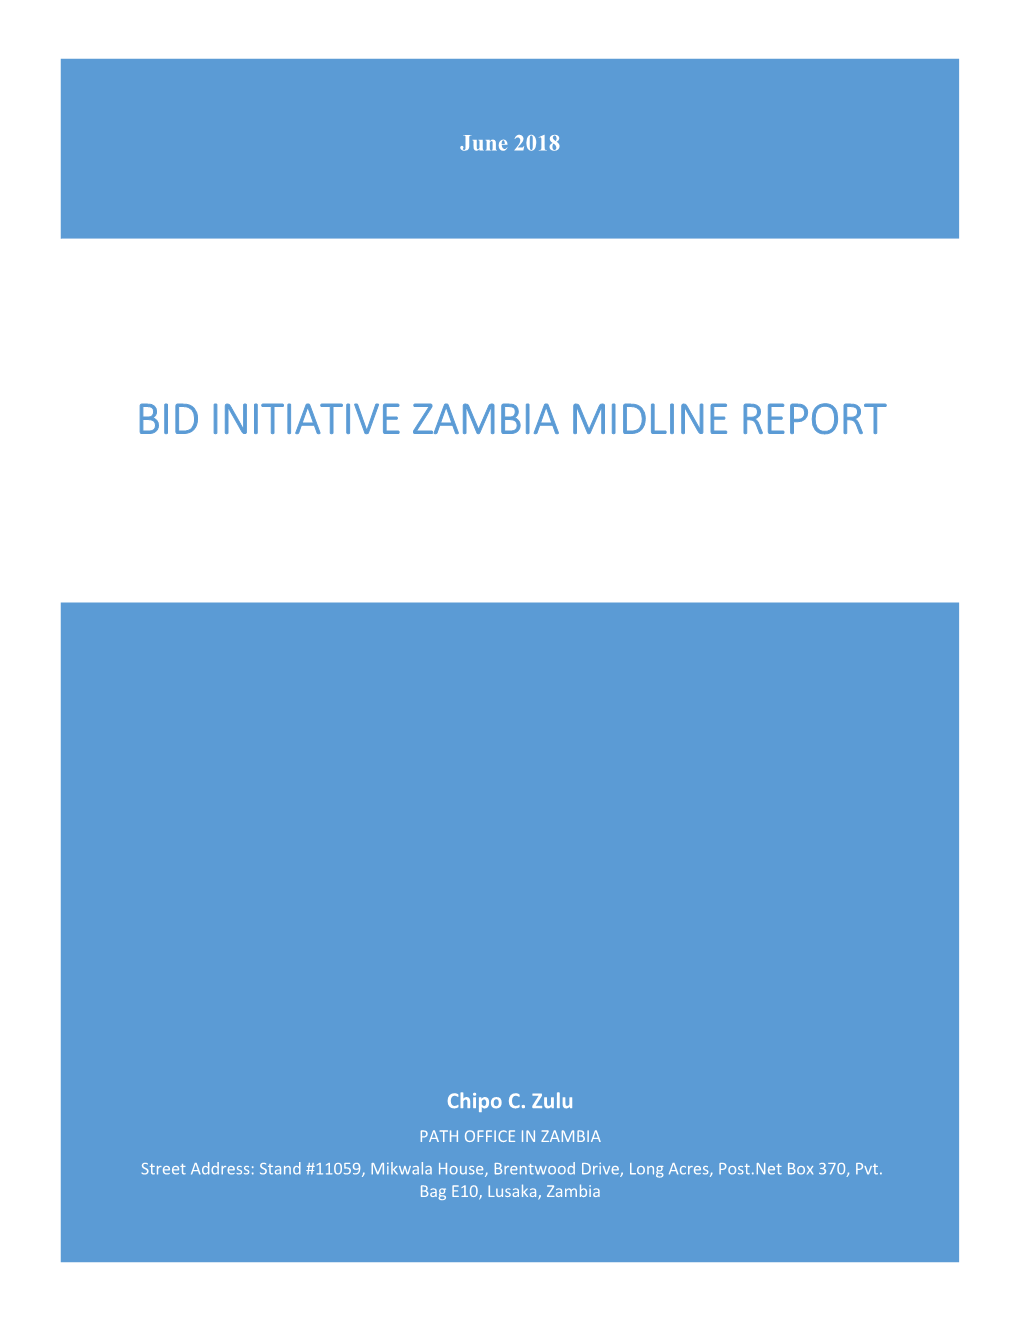 Bid Initiative Zambia Midline Report